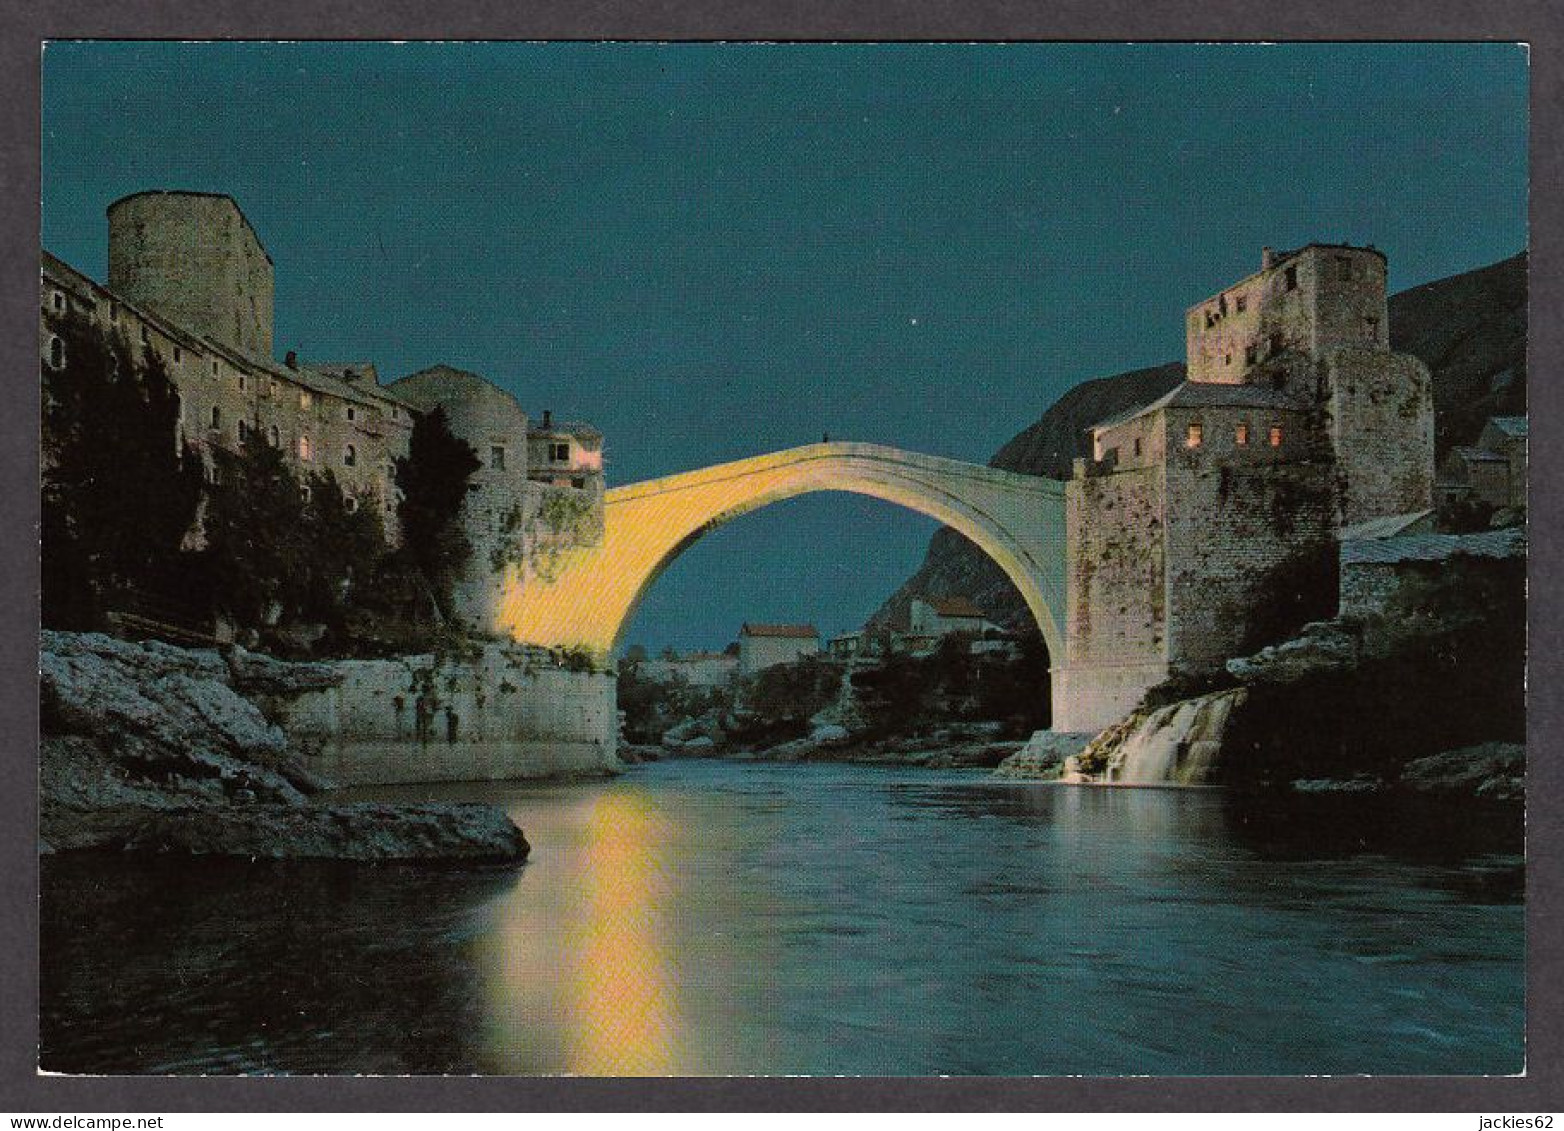 112250/ MOSTAR, The Old Bridge, Stari Most - Bosnie-Herzegovine